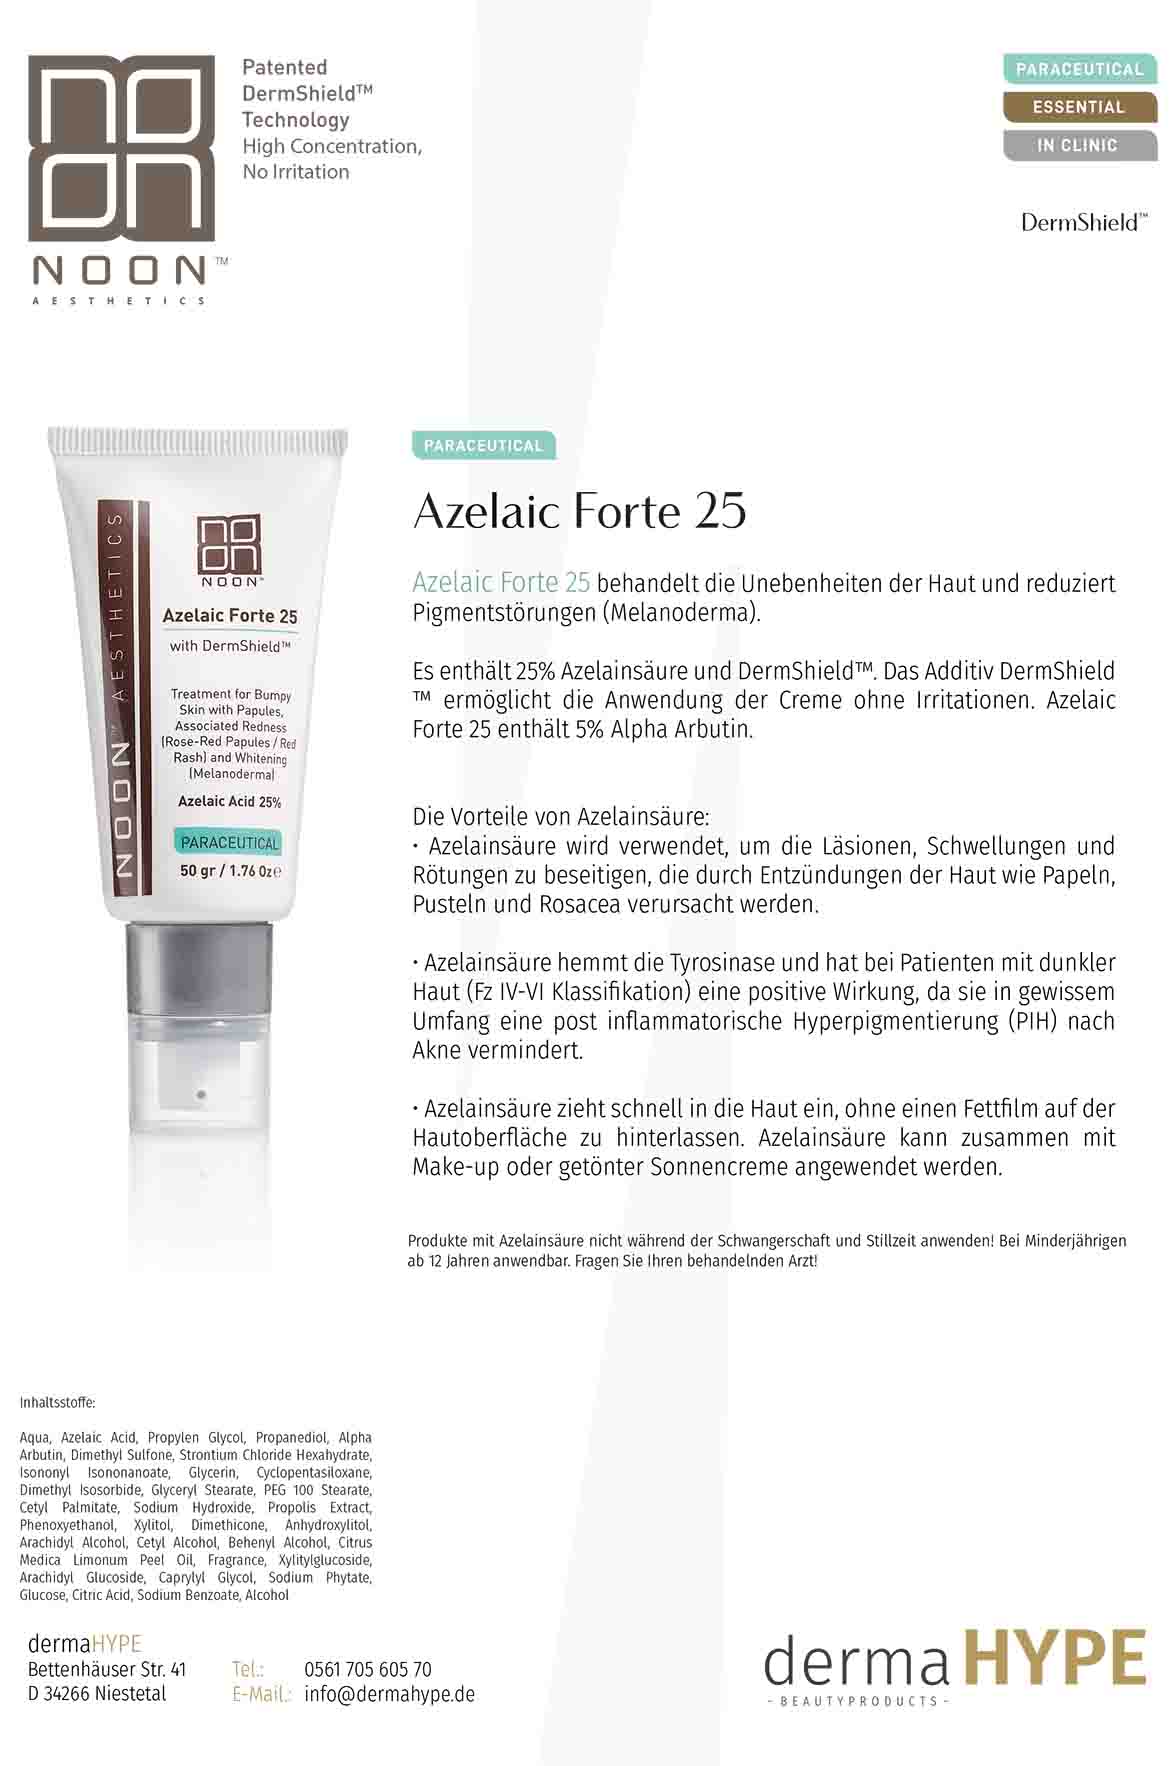 Azelaic Forte 25 Leaflet | Yuliskin.de